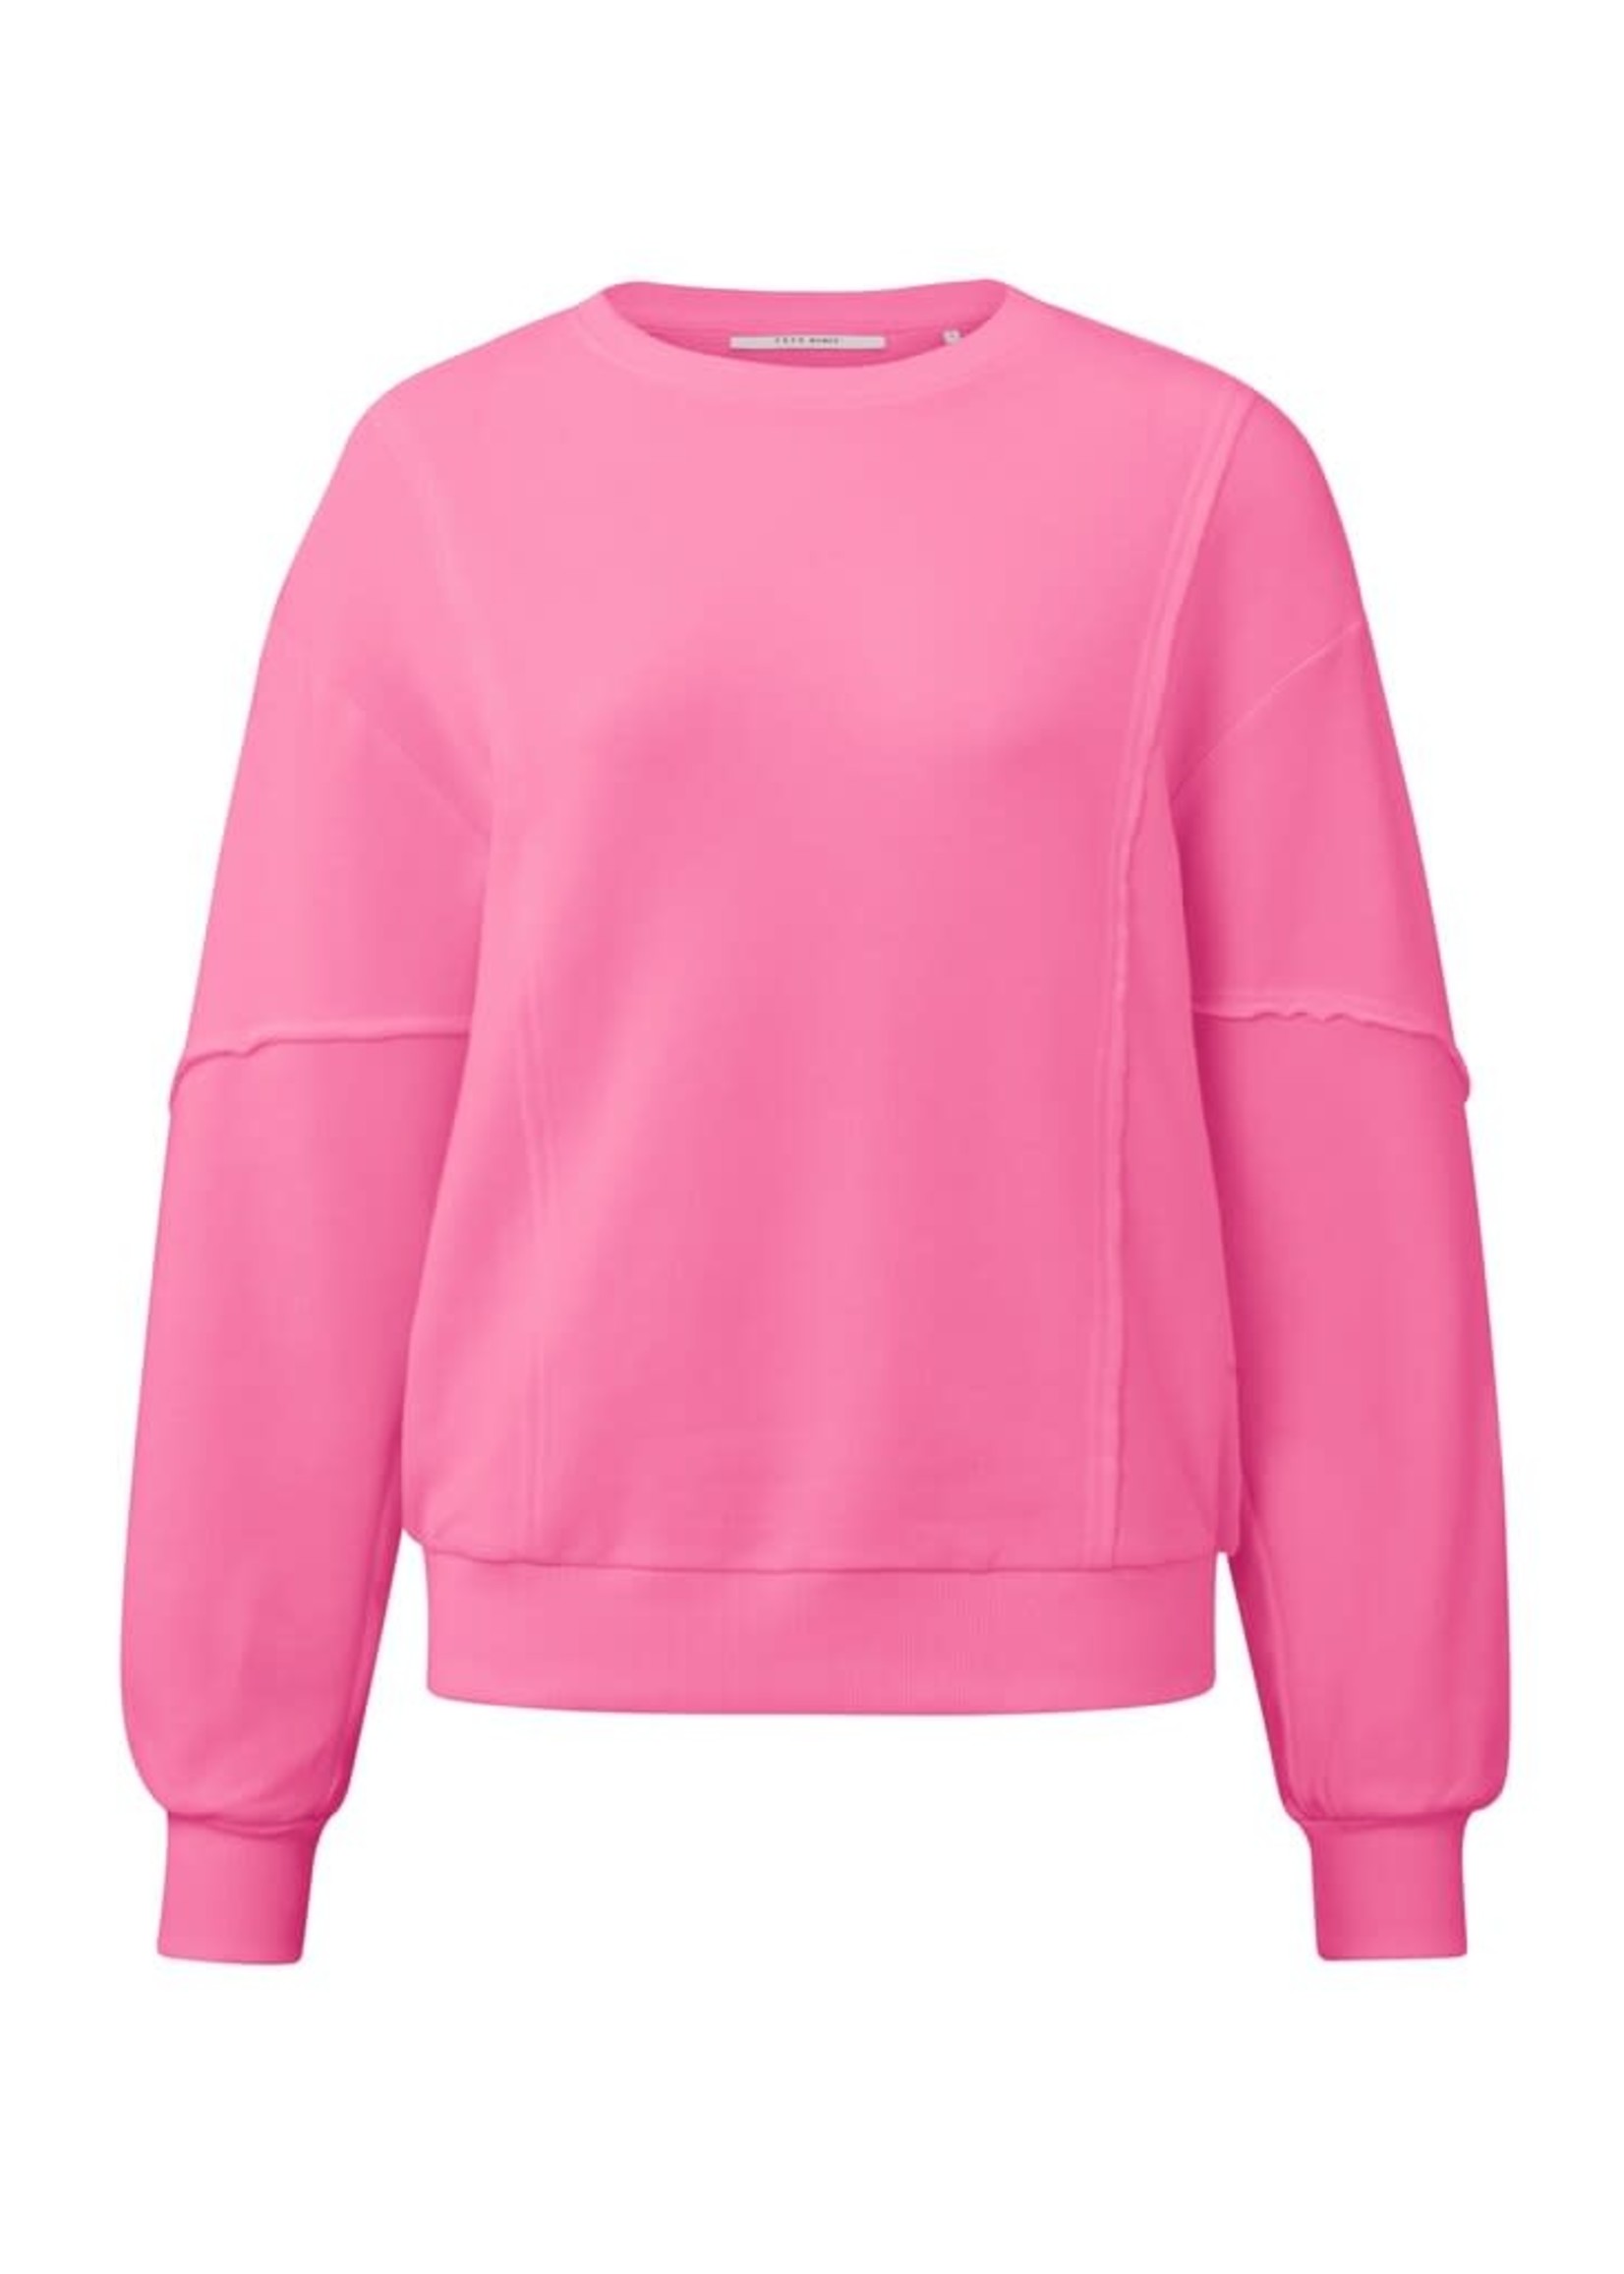 Yaya Yaya, Sweatshirt with crewneck, long sleeves, Cosmos Pink